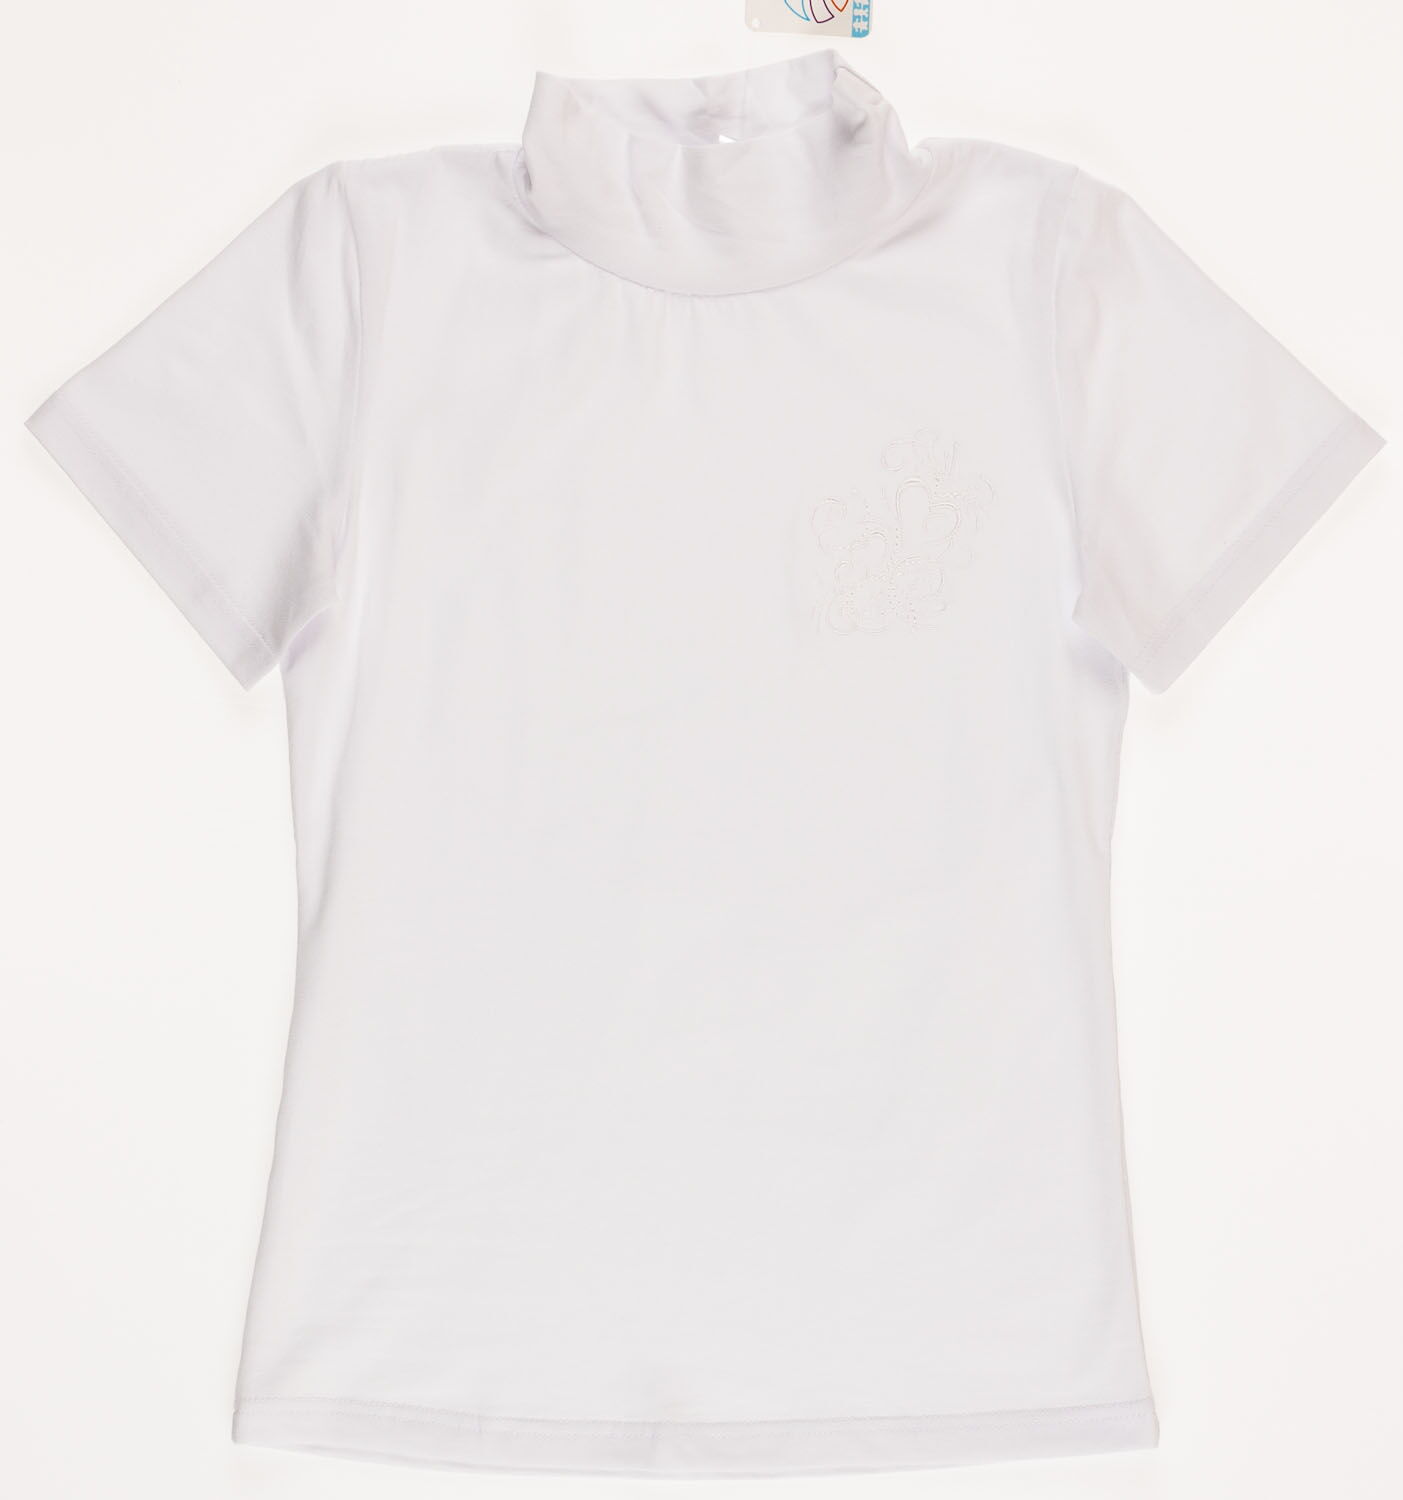 Блузка трикотажная с коротким рукавом Valeri tex белая 1507-20-242 - цена